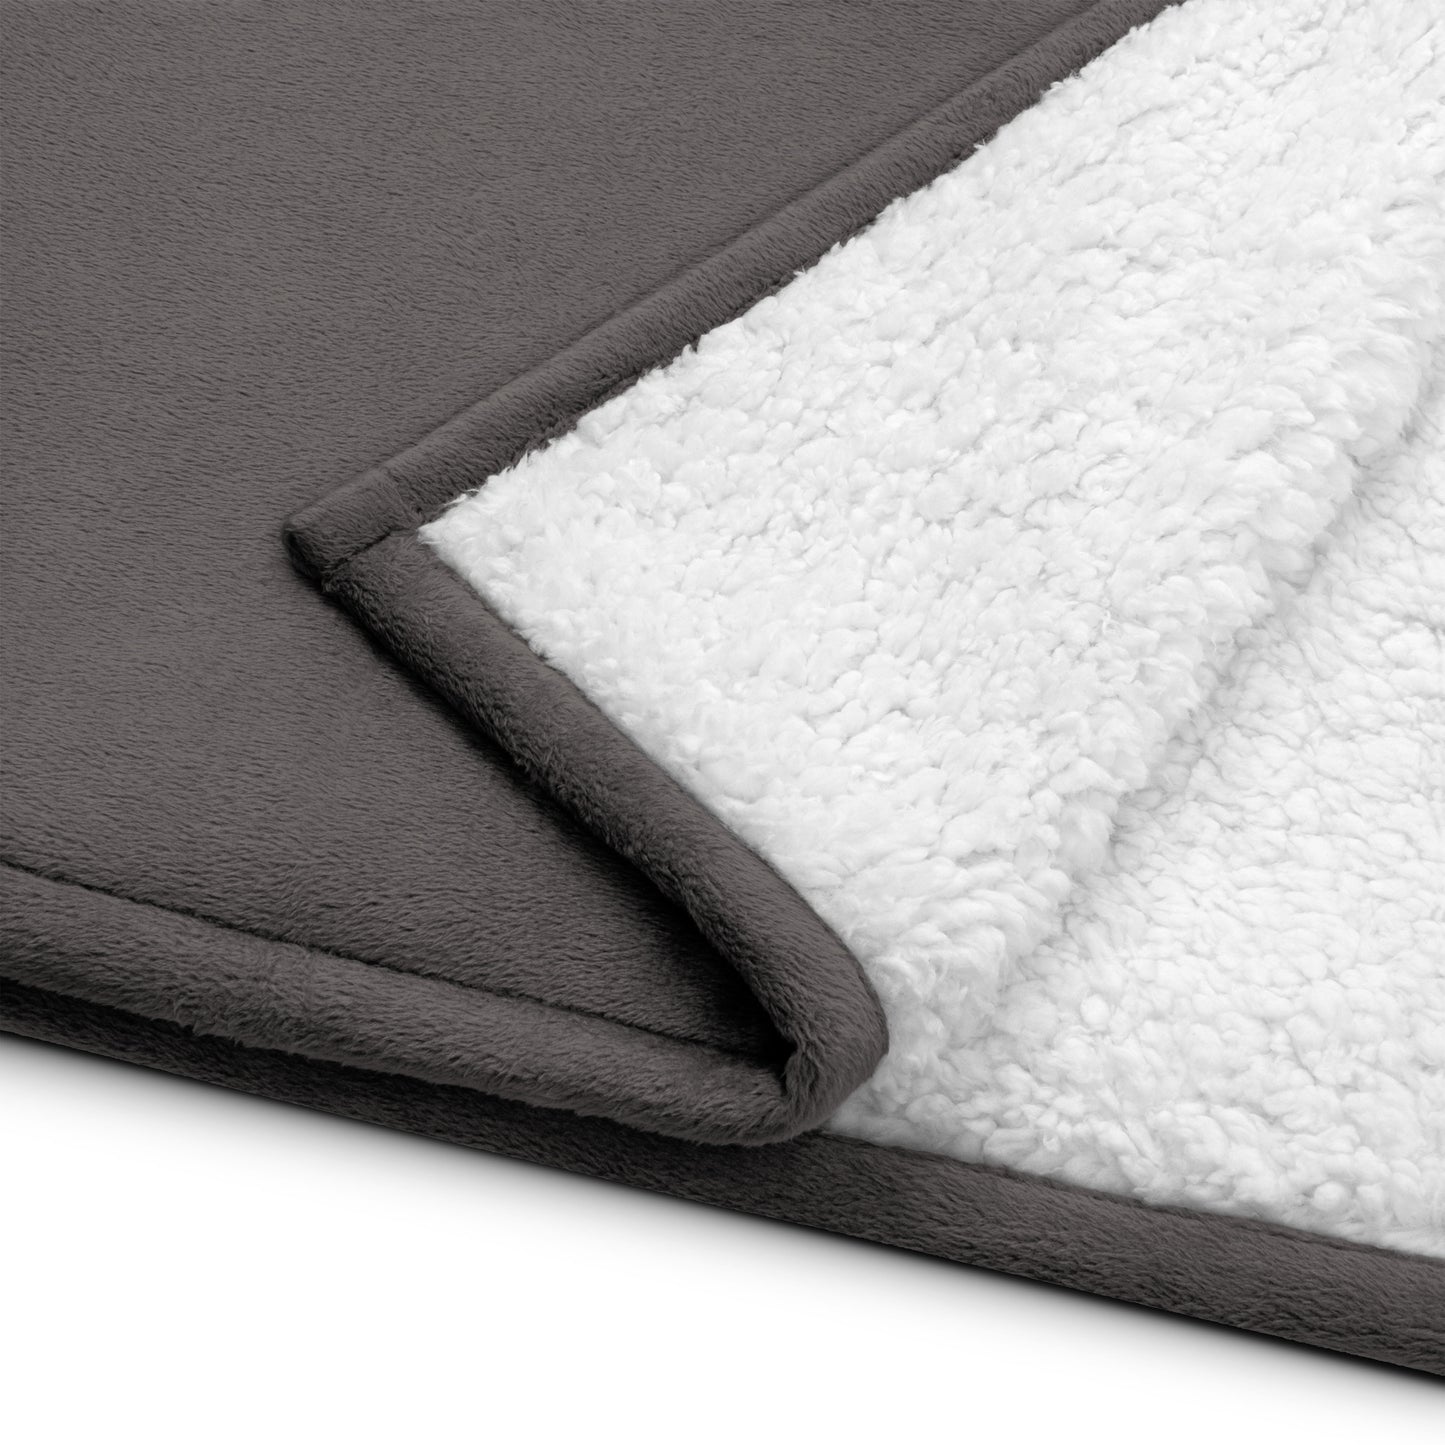 Sourdough and More Premium Sherpa Blanket